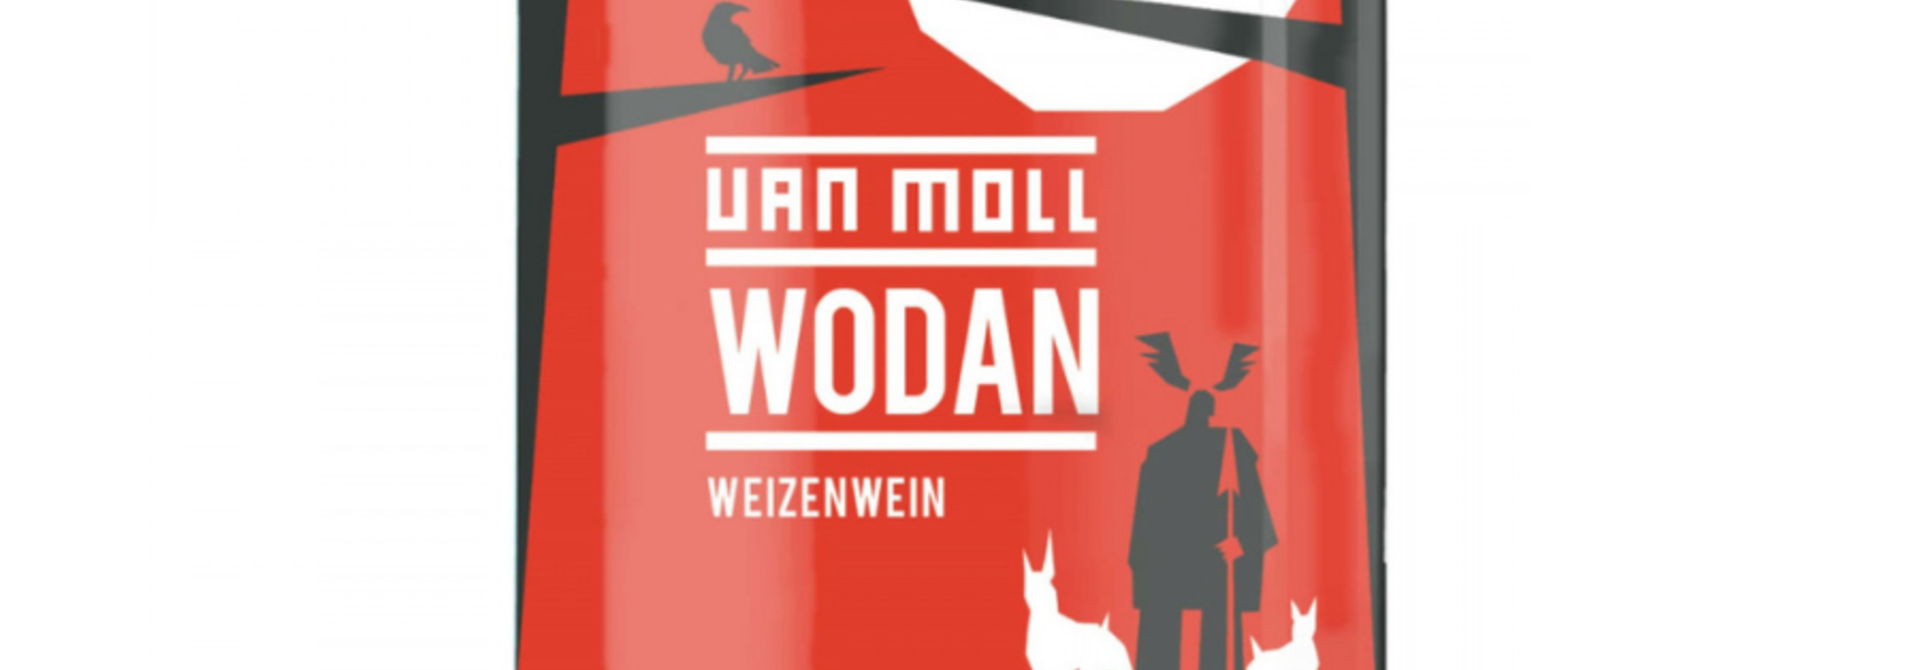 Van Moll Wodan 10,5%